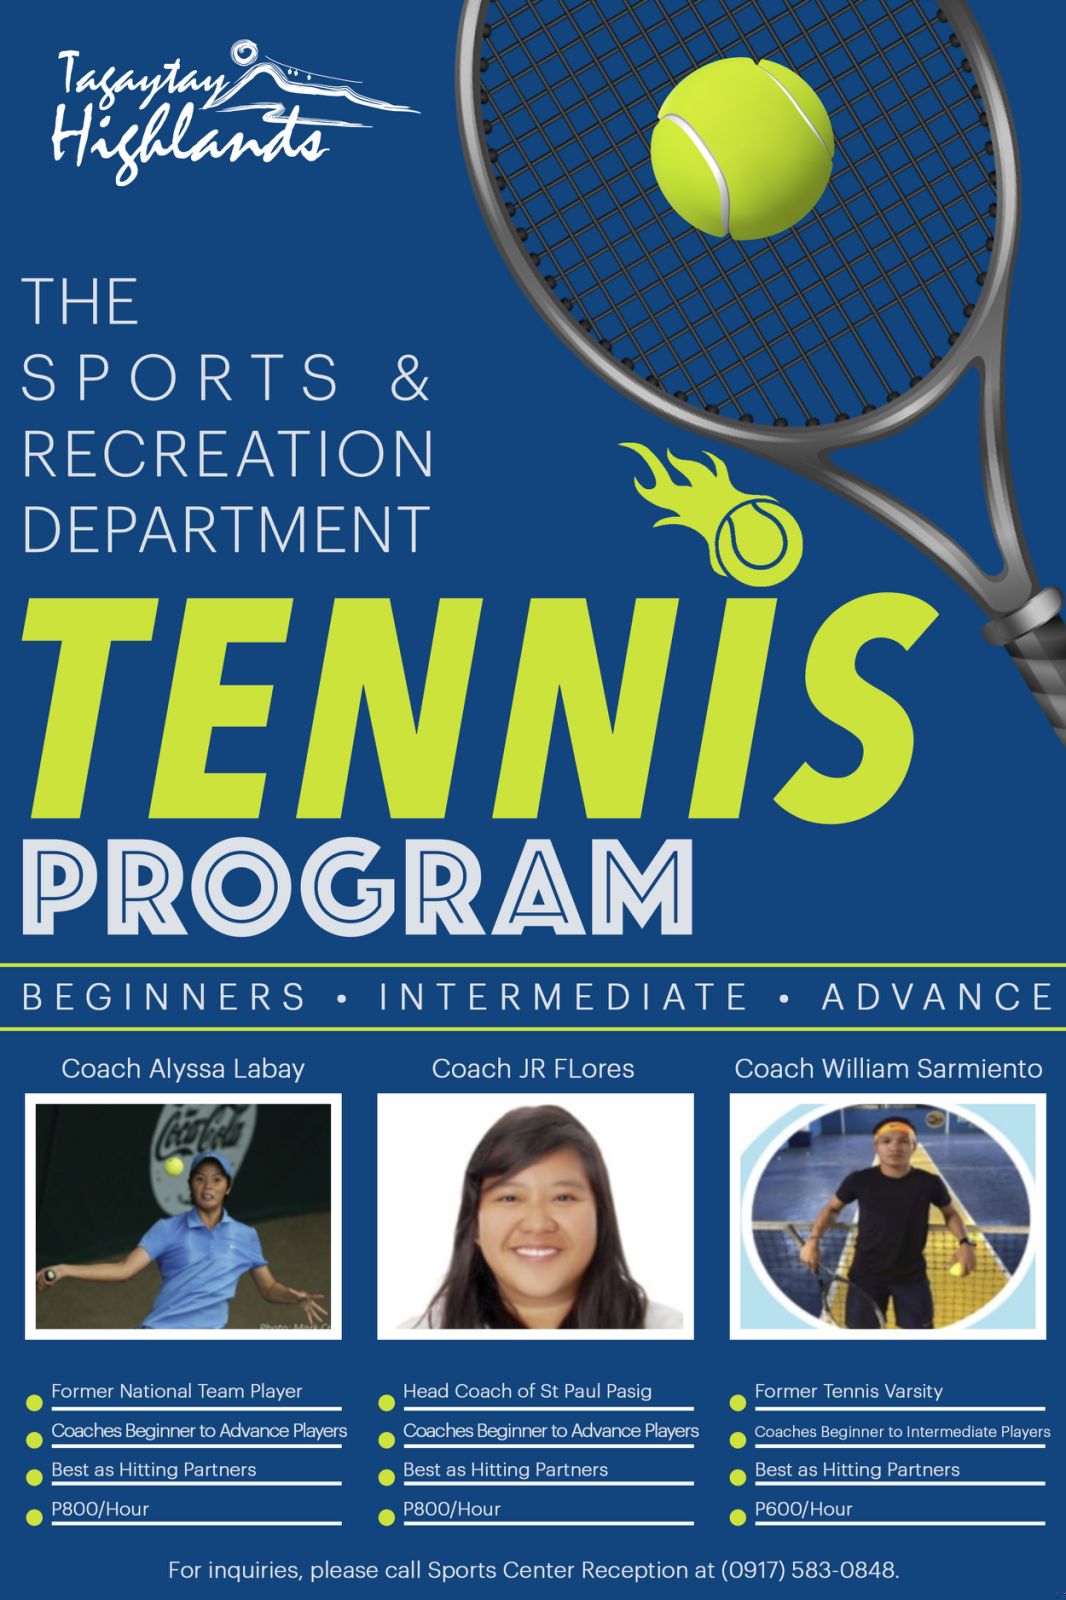 Tennis Program - The official website of Tagaytay Highlands